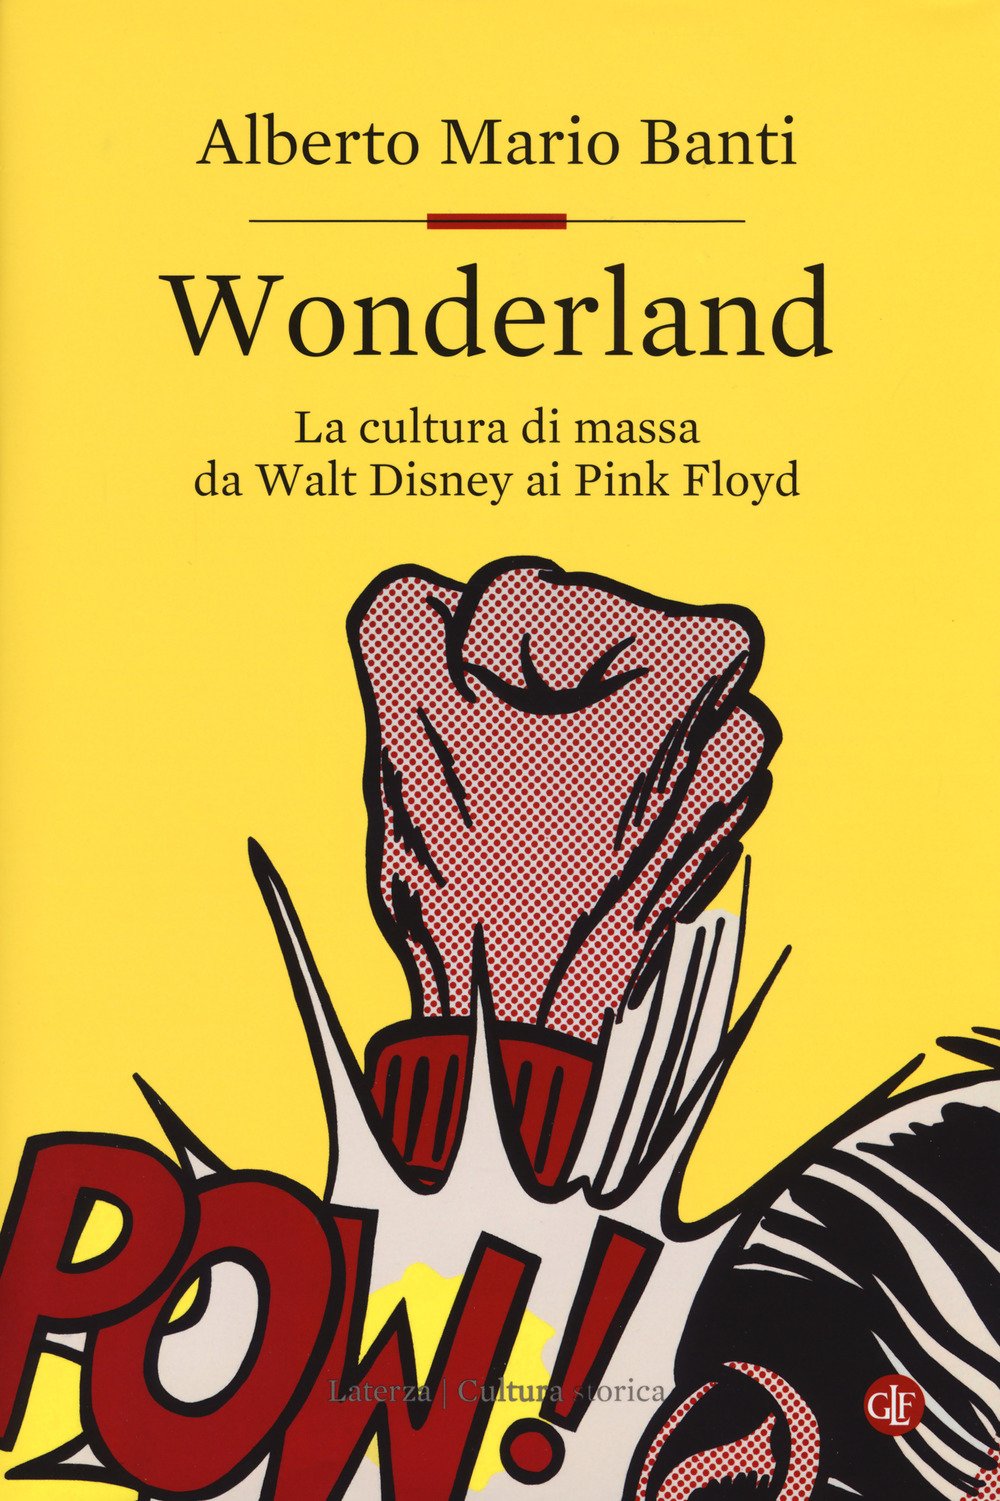 Alberto Mario Banti: Wonderland (Hardcover, italiano language, 2017, Laterza)